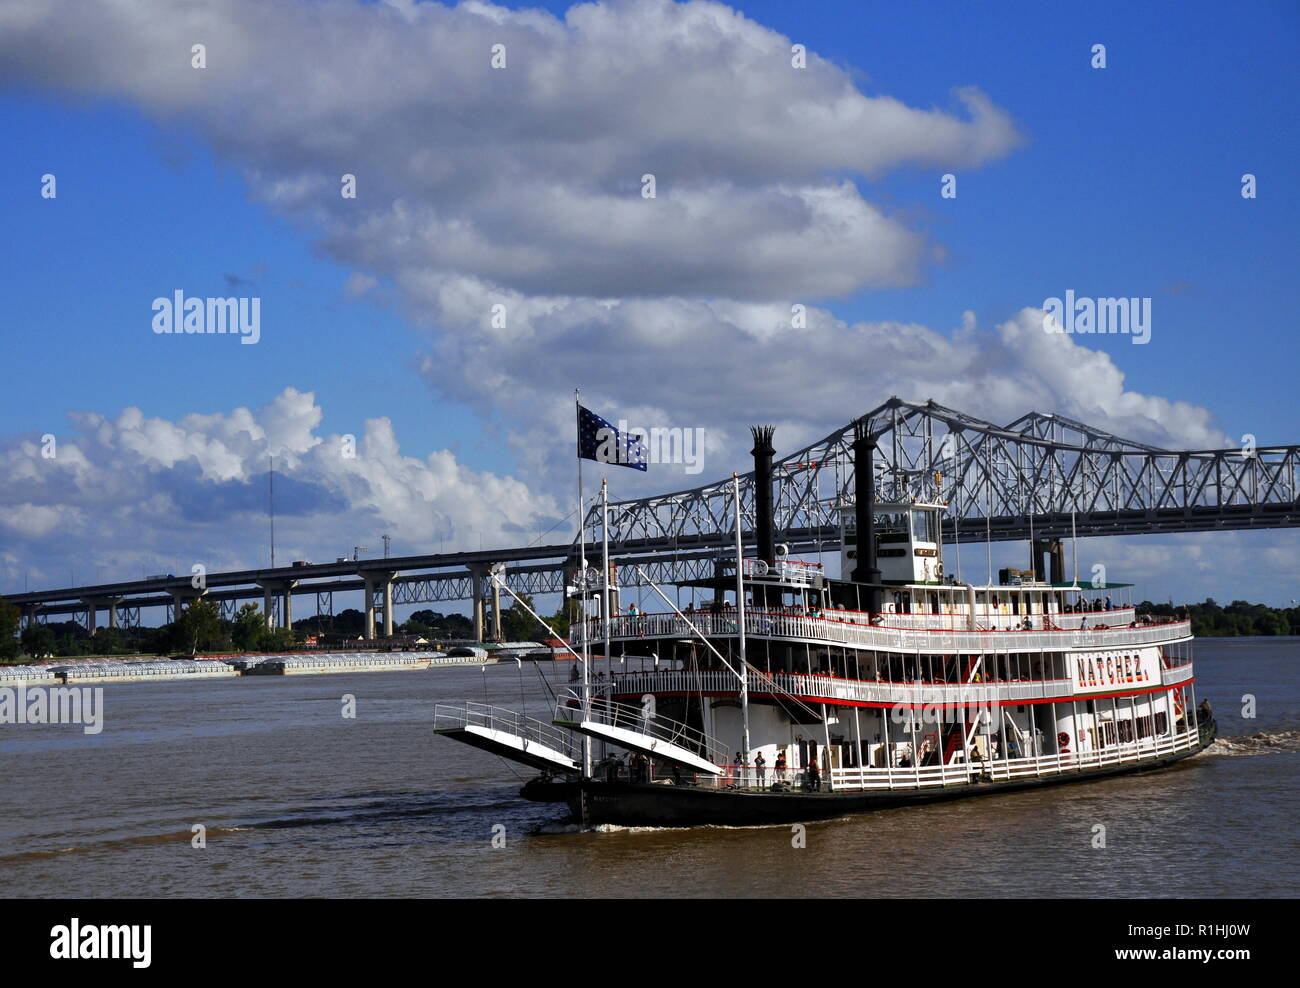 Il riverboat Natchez, solcare le acque del fiume Mississippi a New Orleans Foto Stock